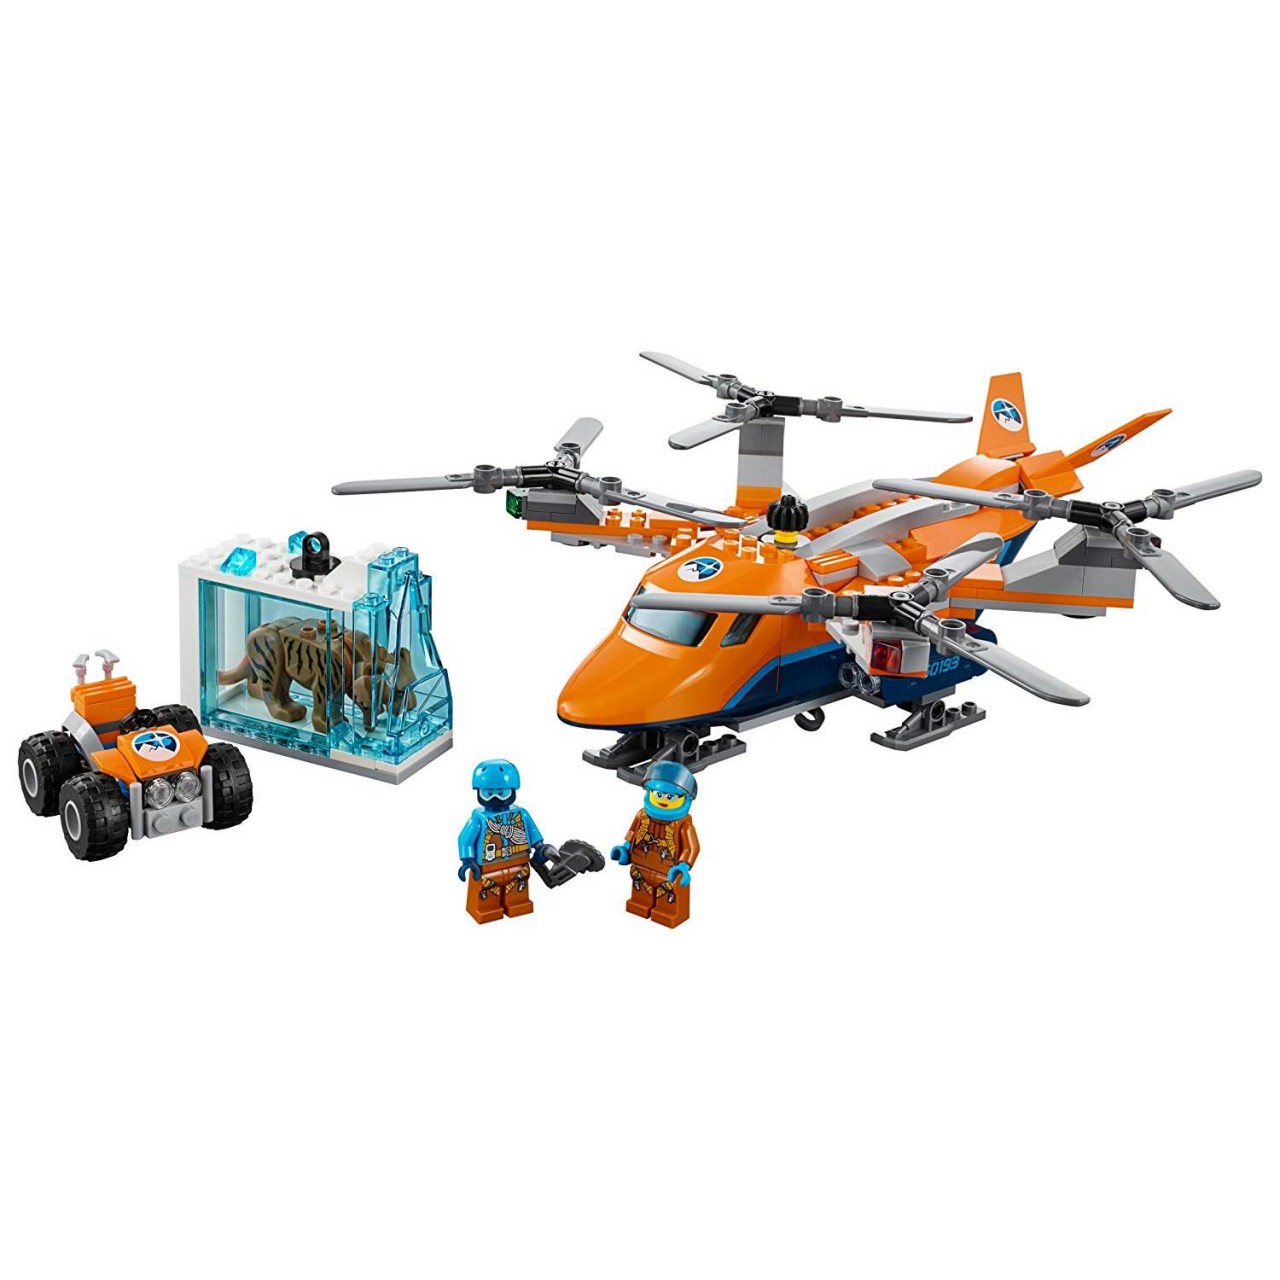 LEGO CITY 60193 Arktis-Frachtflugzeug